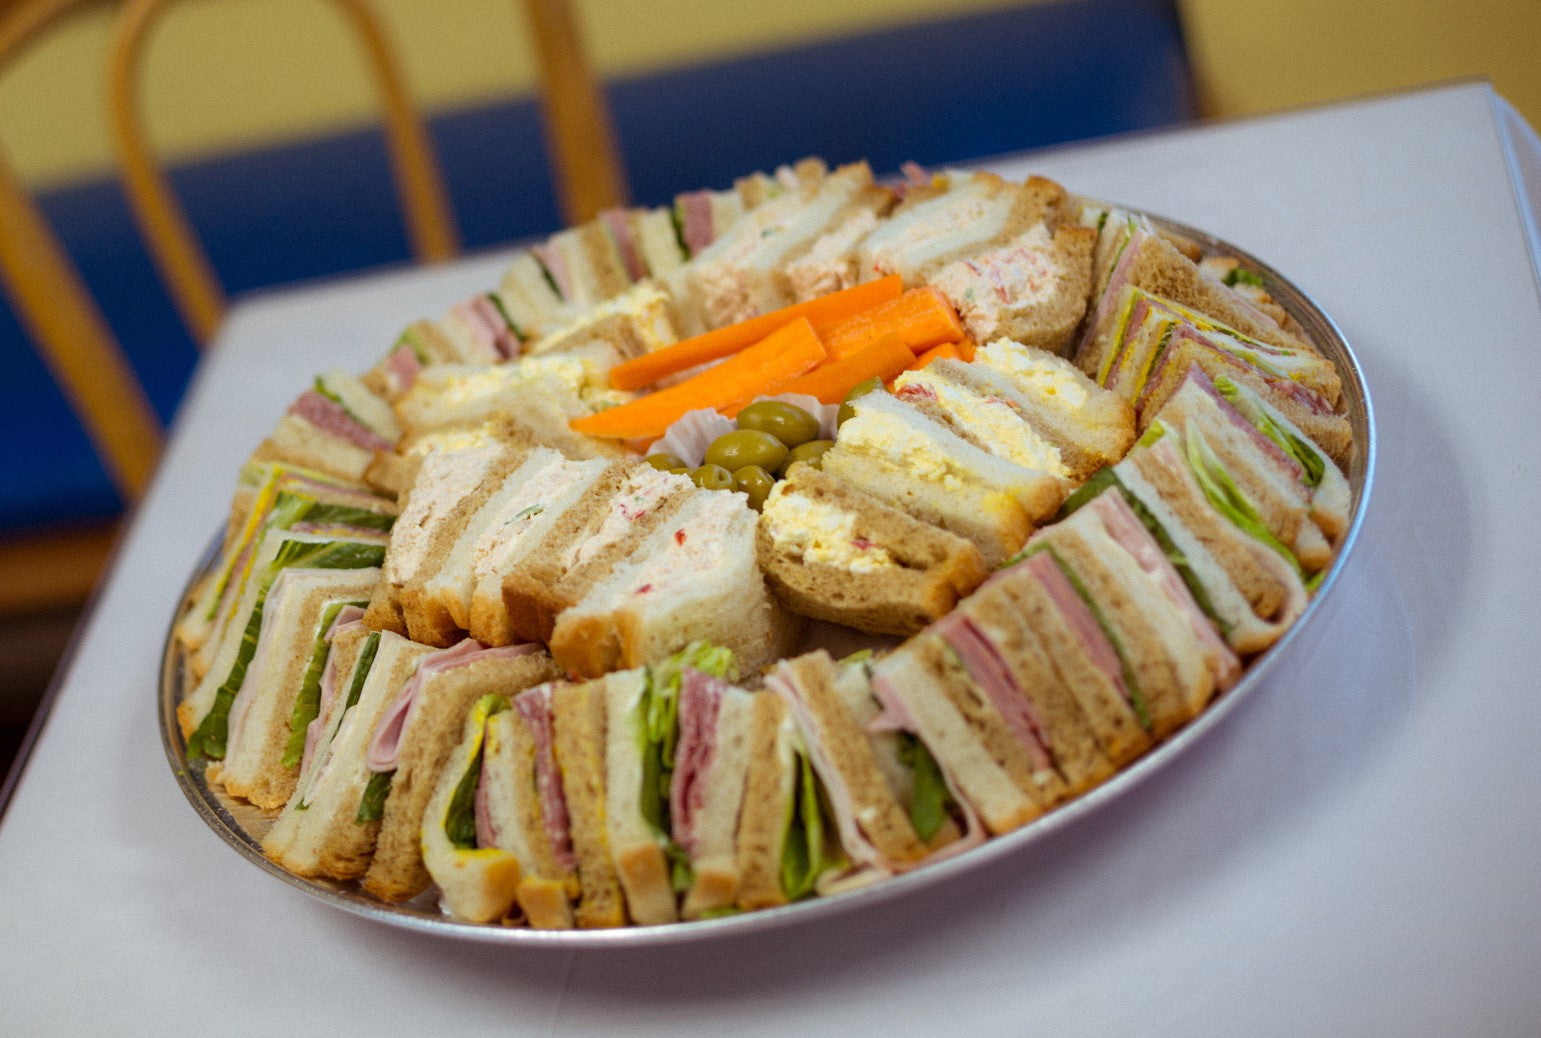 Regular Sandwich Tray